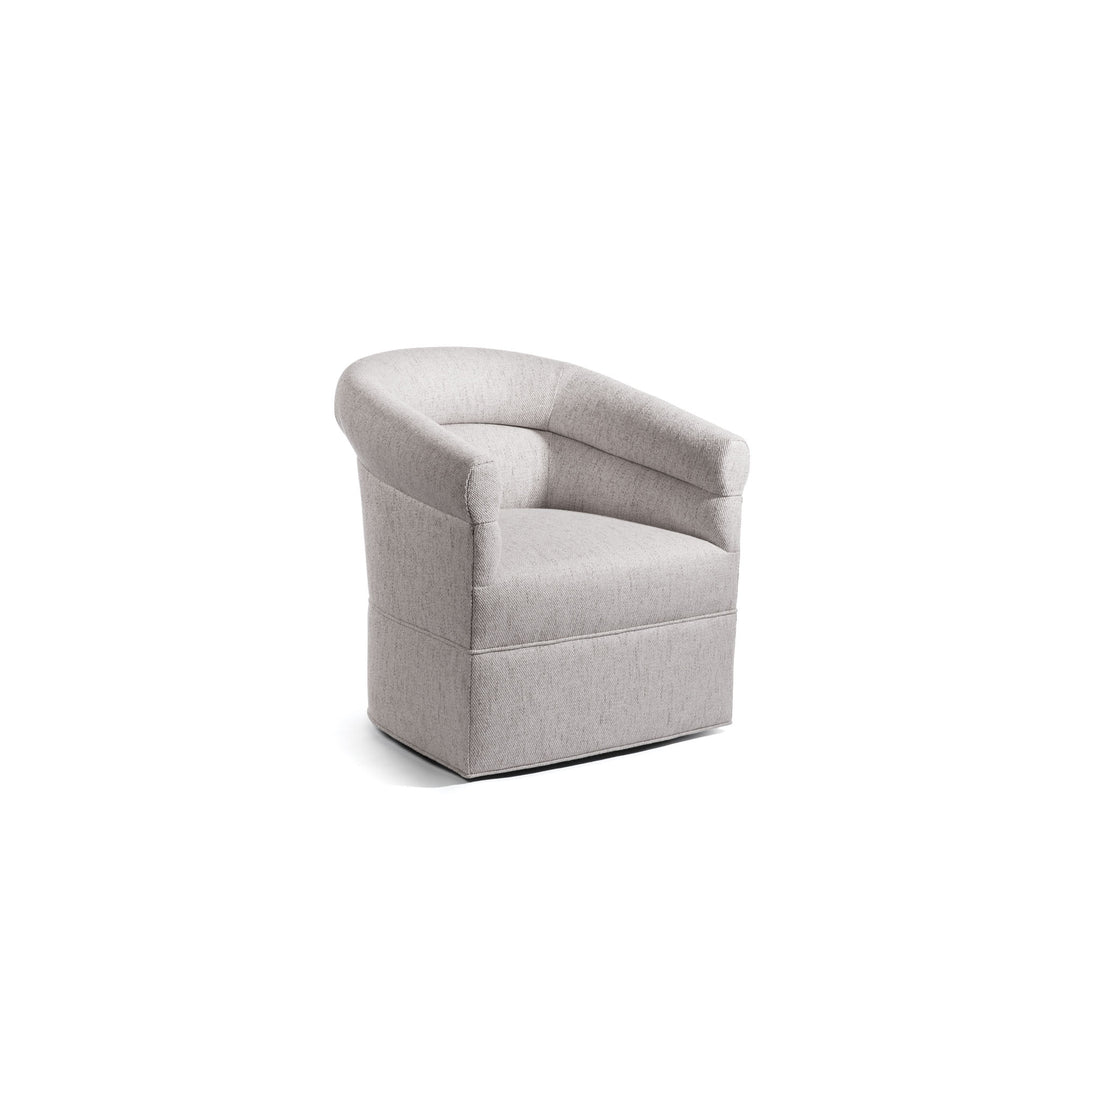 Clare Petite Swivel Lounge Chair